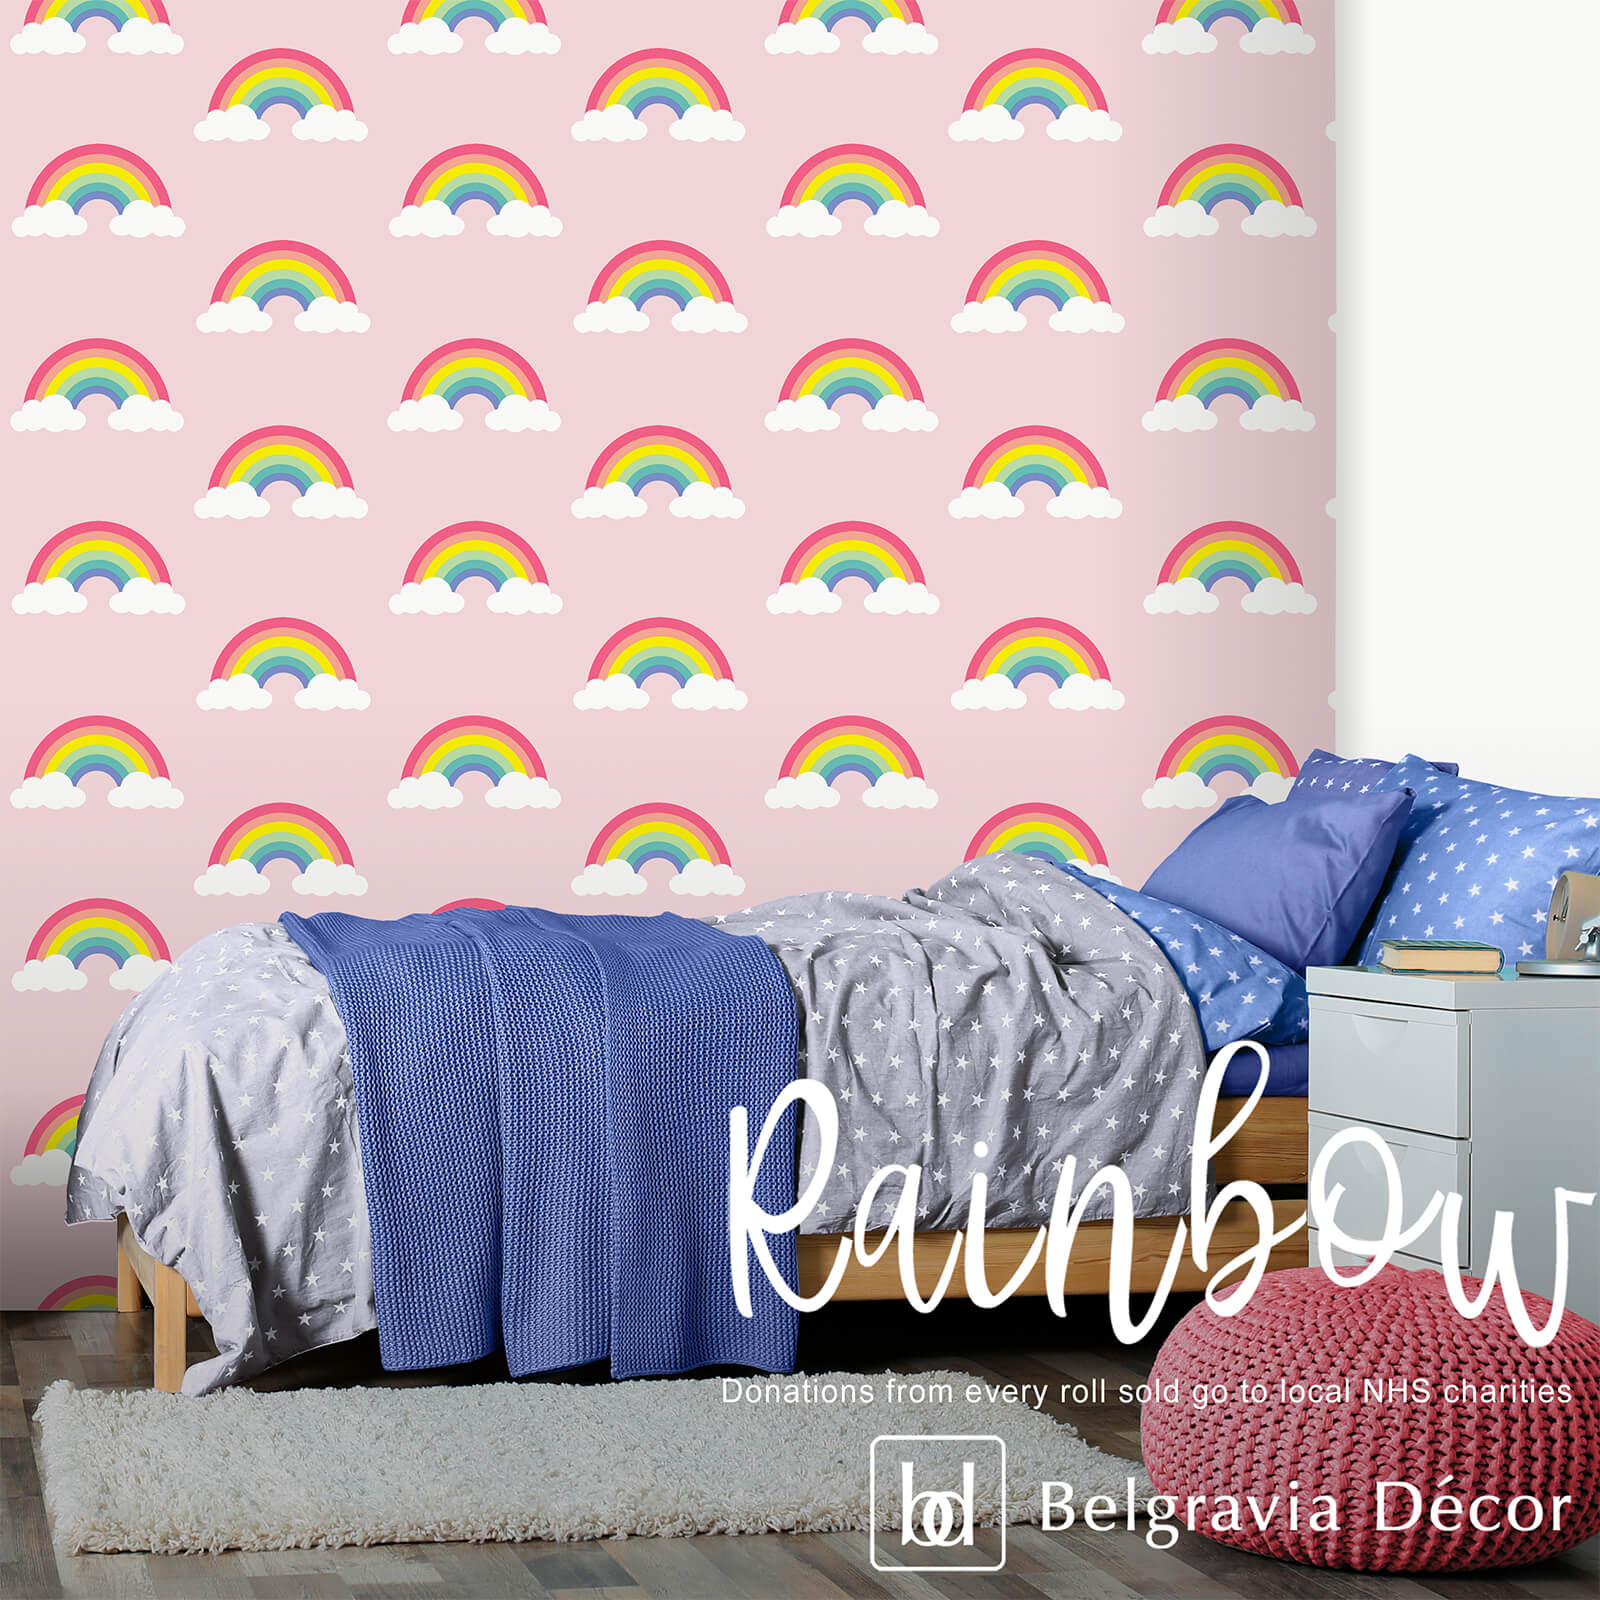 Belgravia Decor Rainbow Pink Wallpaper (supporting NHS charities)